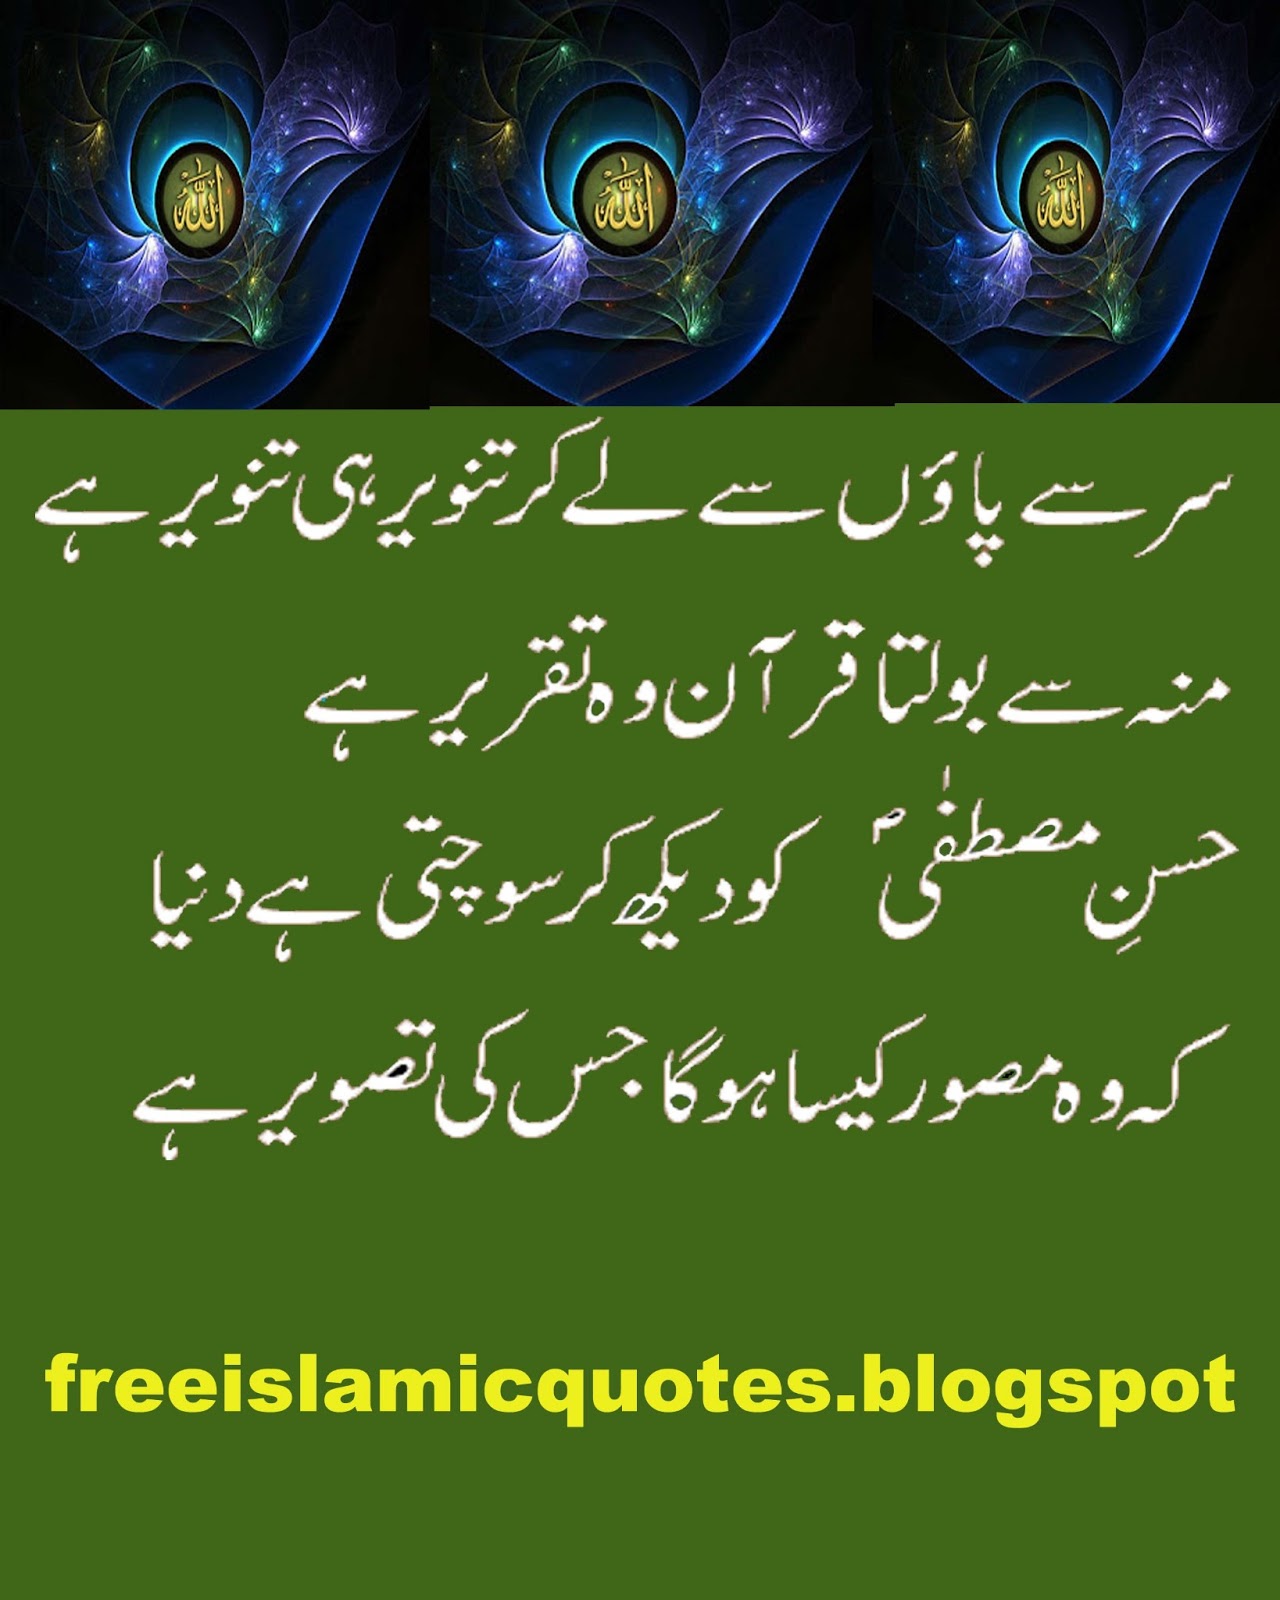 Wallpapers Islamic Desktop Wallpapers Free Download | Re-Downloads ...